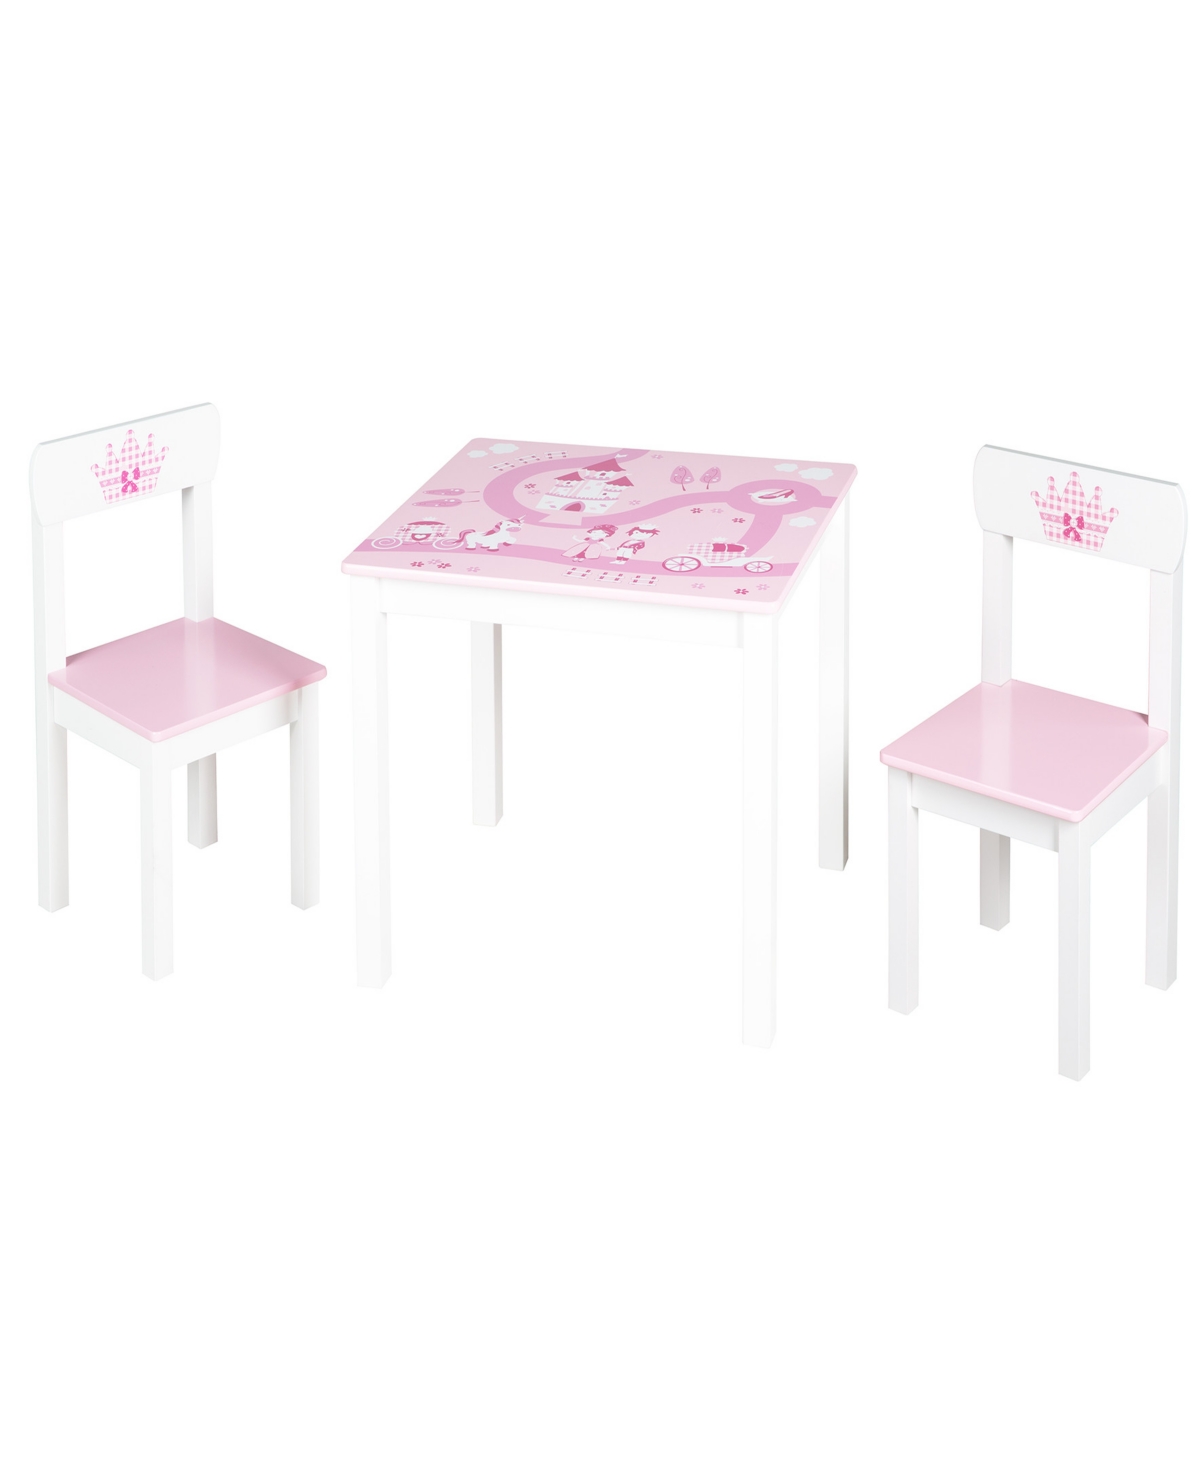 Roba-kids Kids' Table Krone Wood Children's Princess Castle Unicorn Design Seating Group Chair 3 Piece Set In Multi